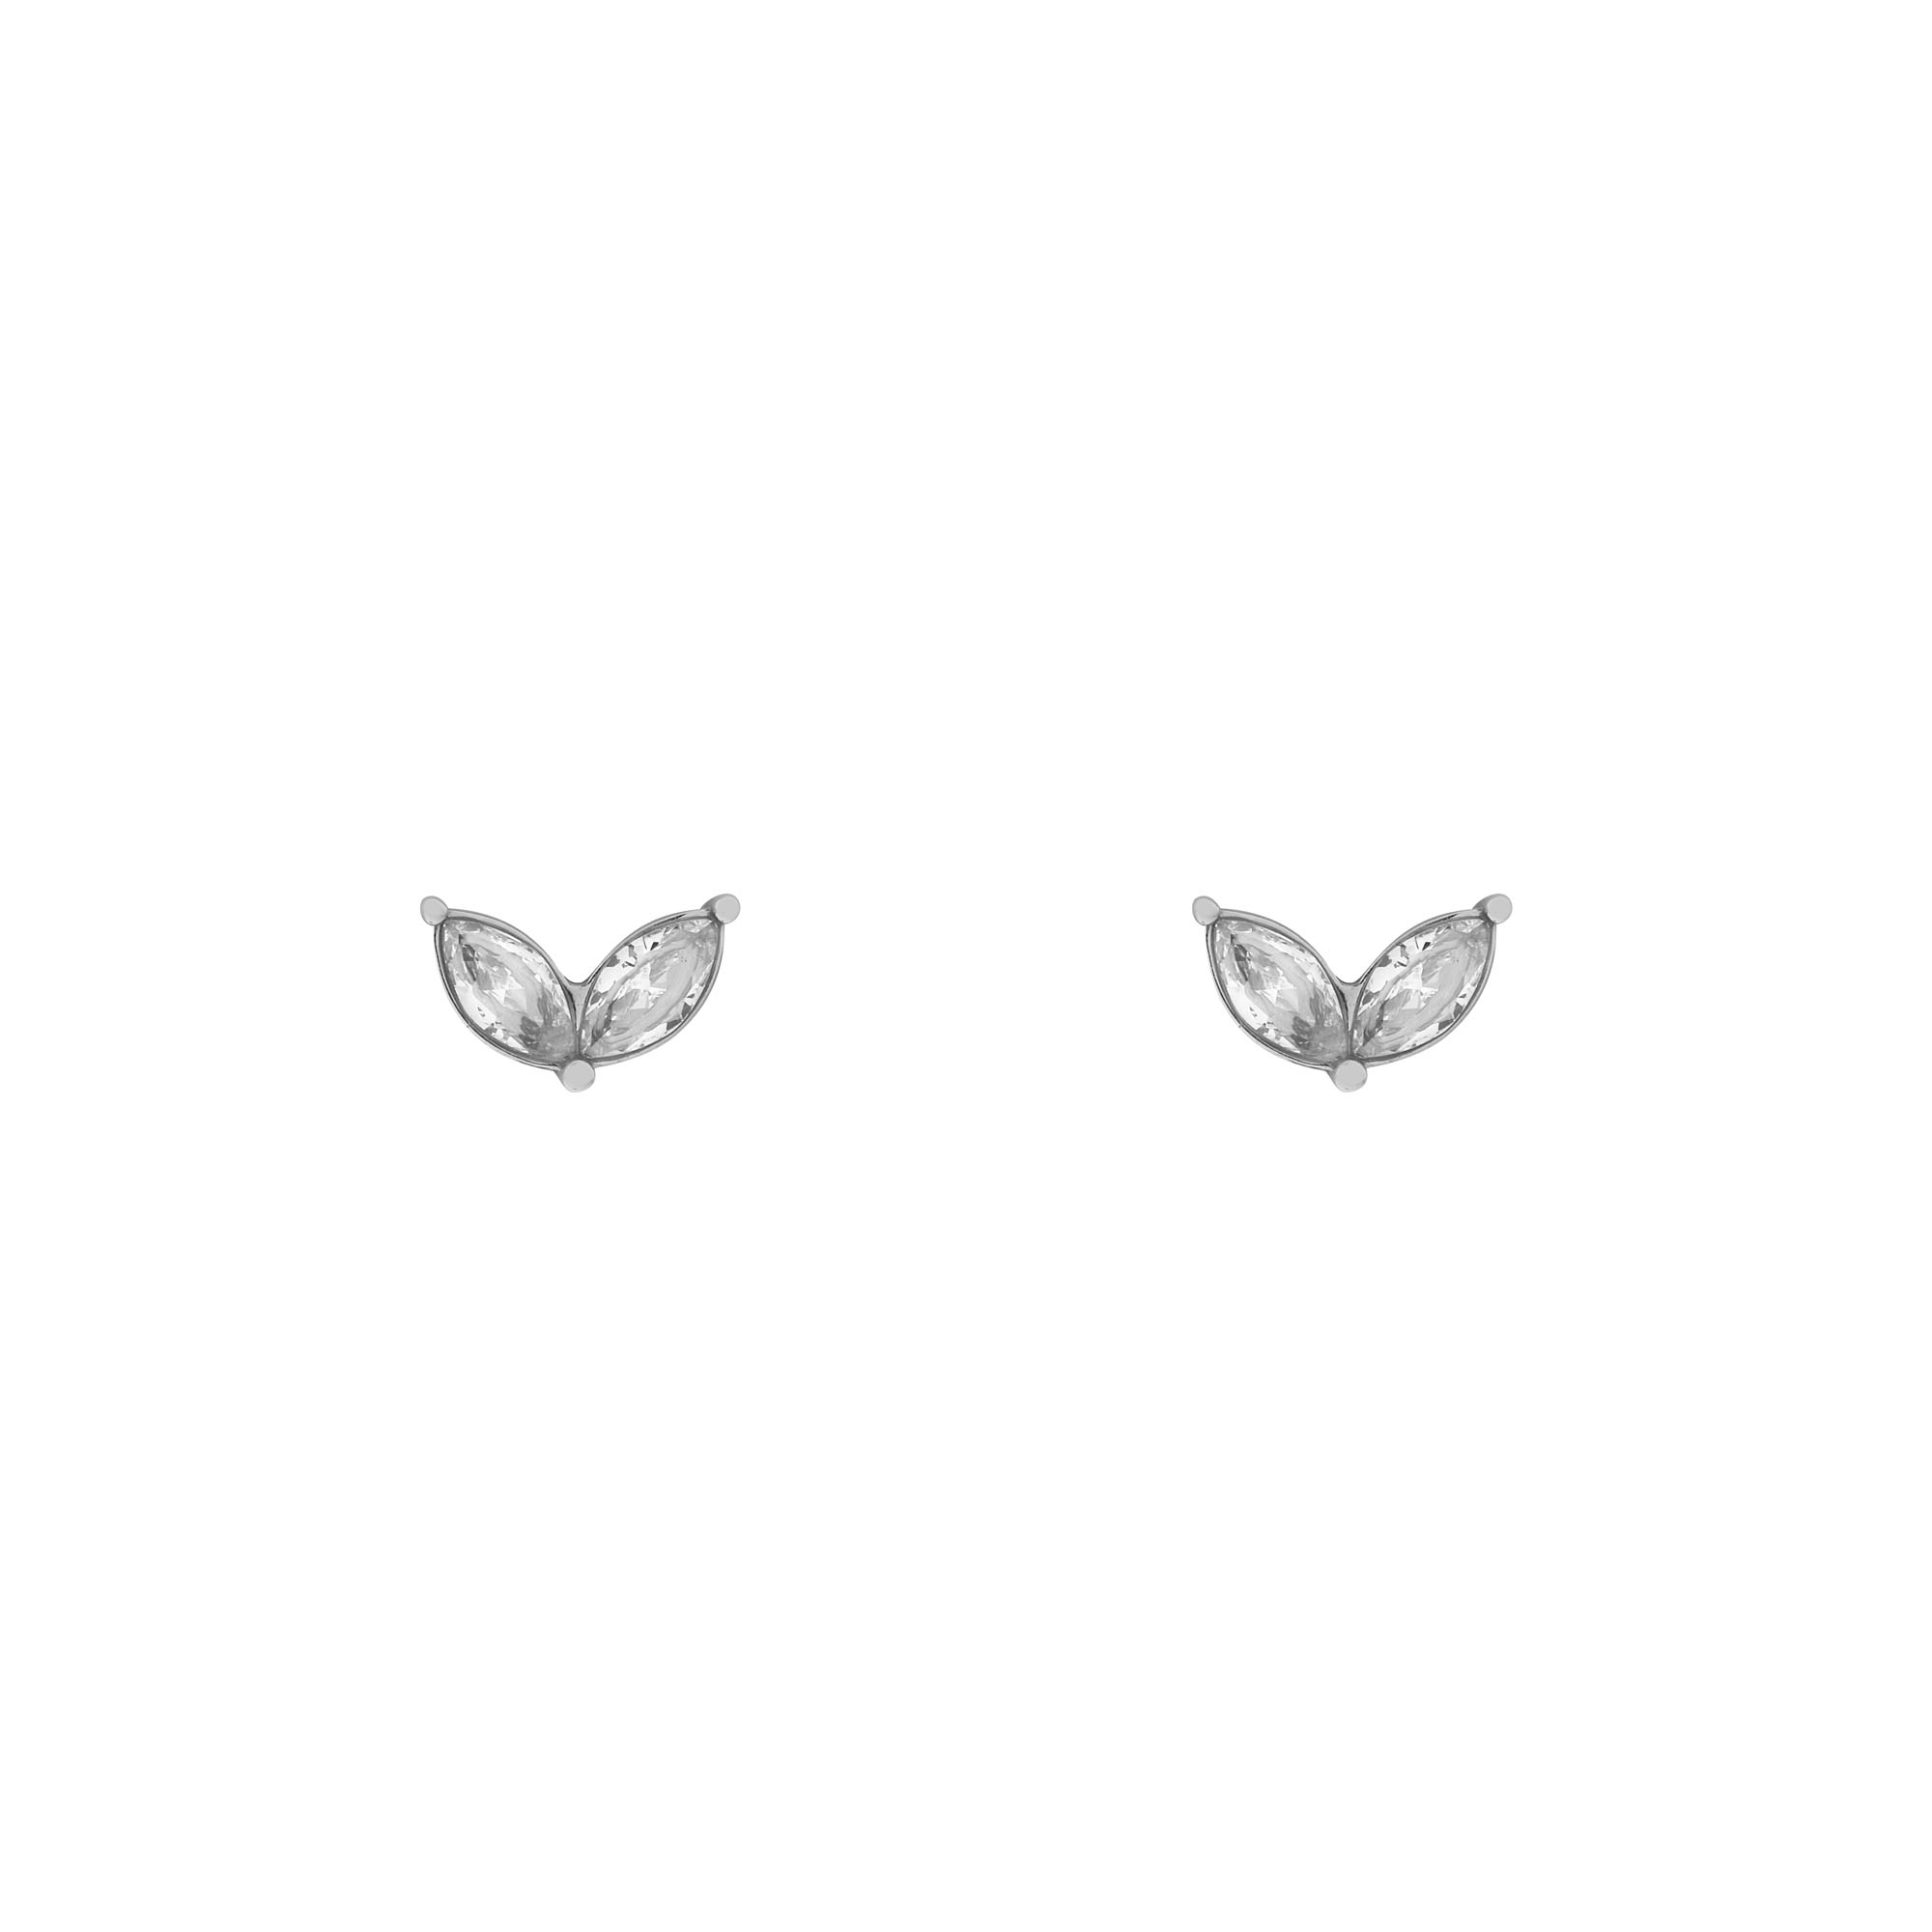 Stud earrings stones wings silver